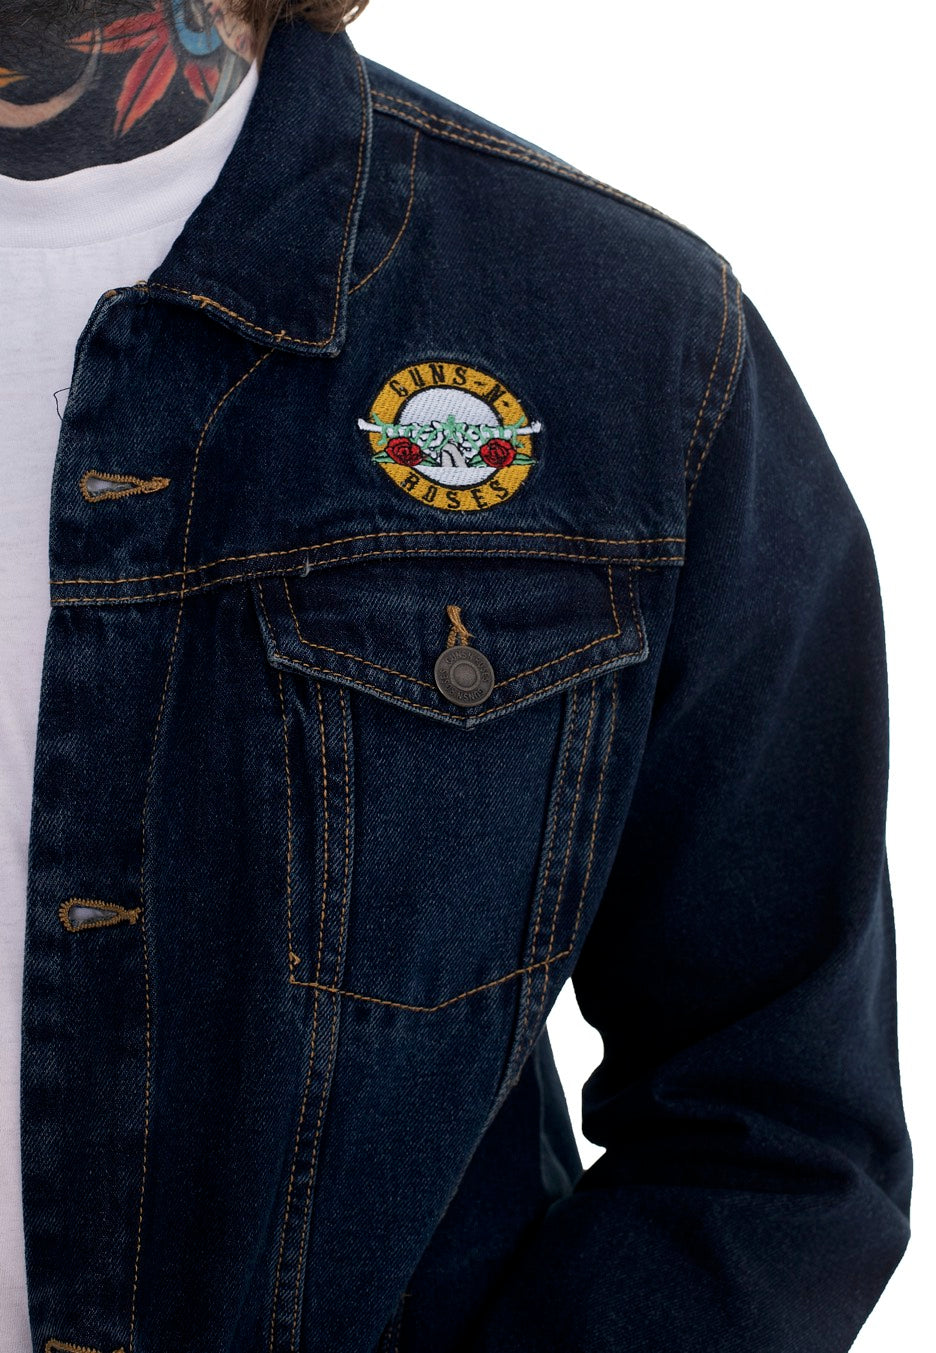 Guns N' Roses - Classic Logo - Jeans Jacket | Men-Image